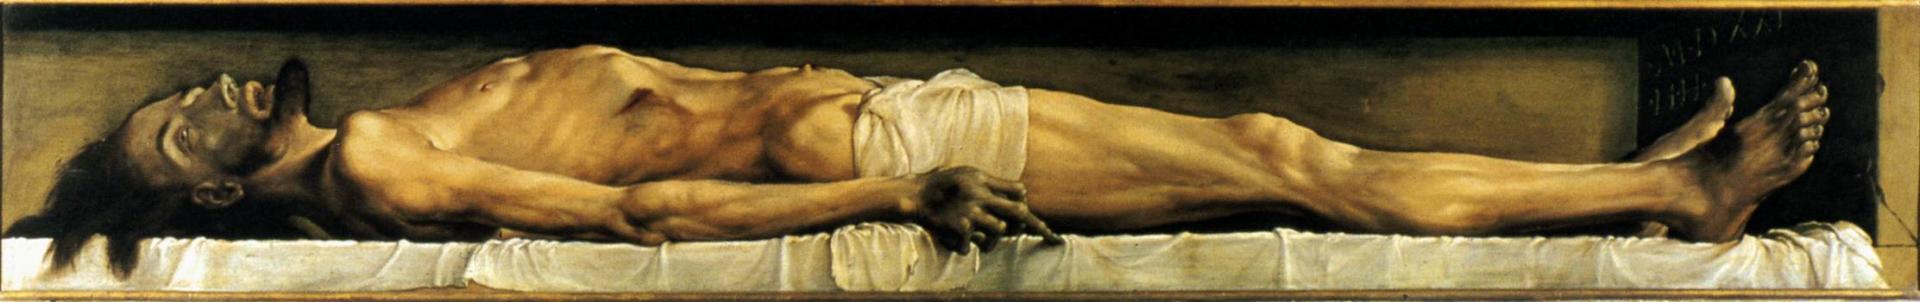 holbein-le-jeune--le-corps-du-christ-mort-dans-sa-tombe--1521-.jpg